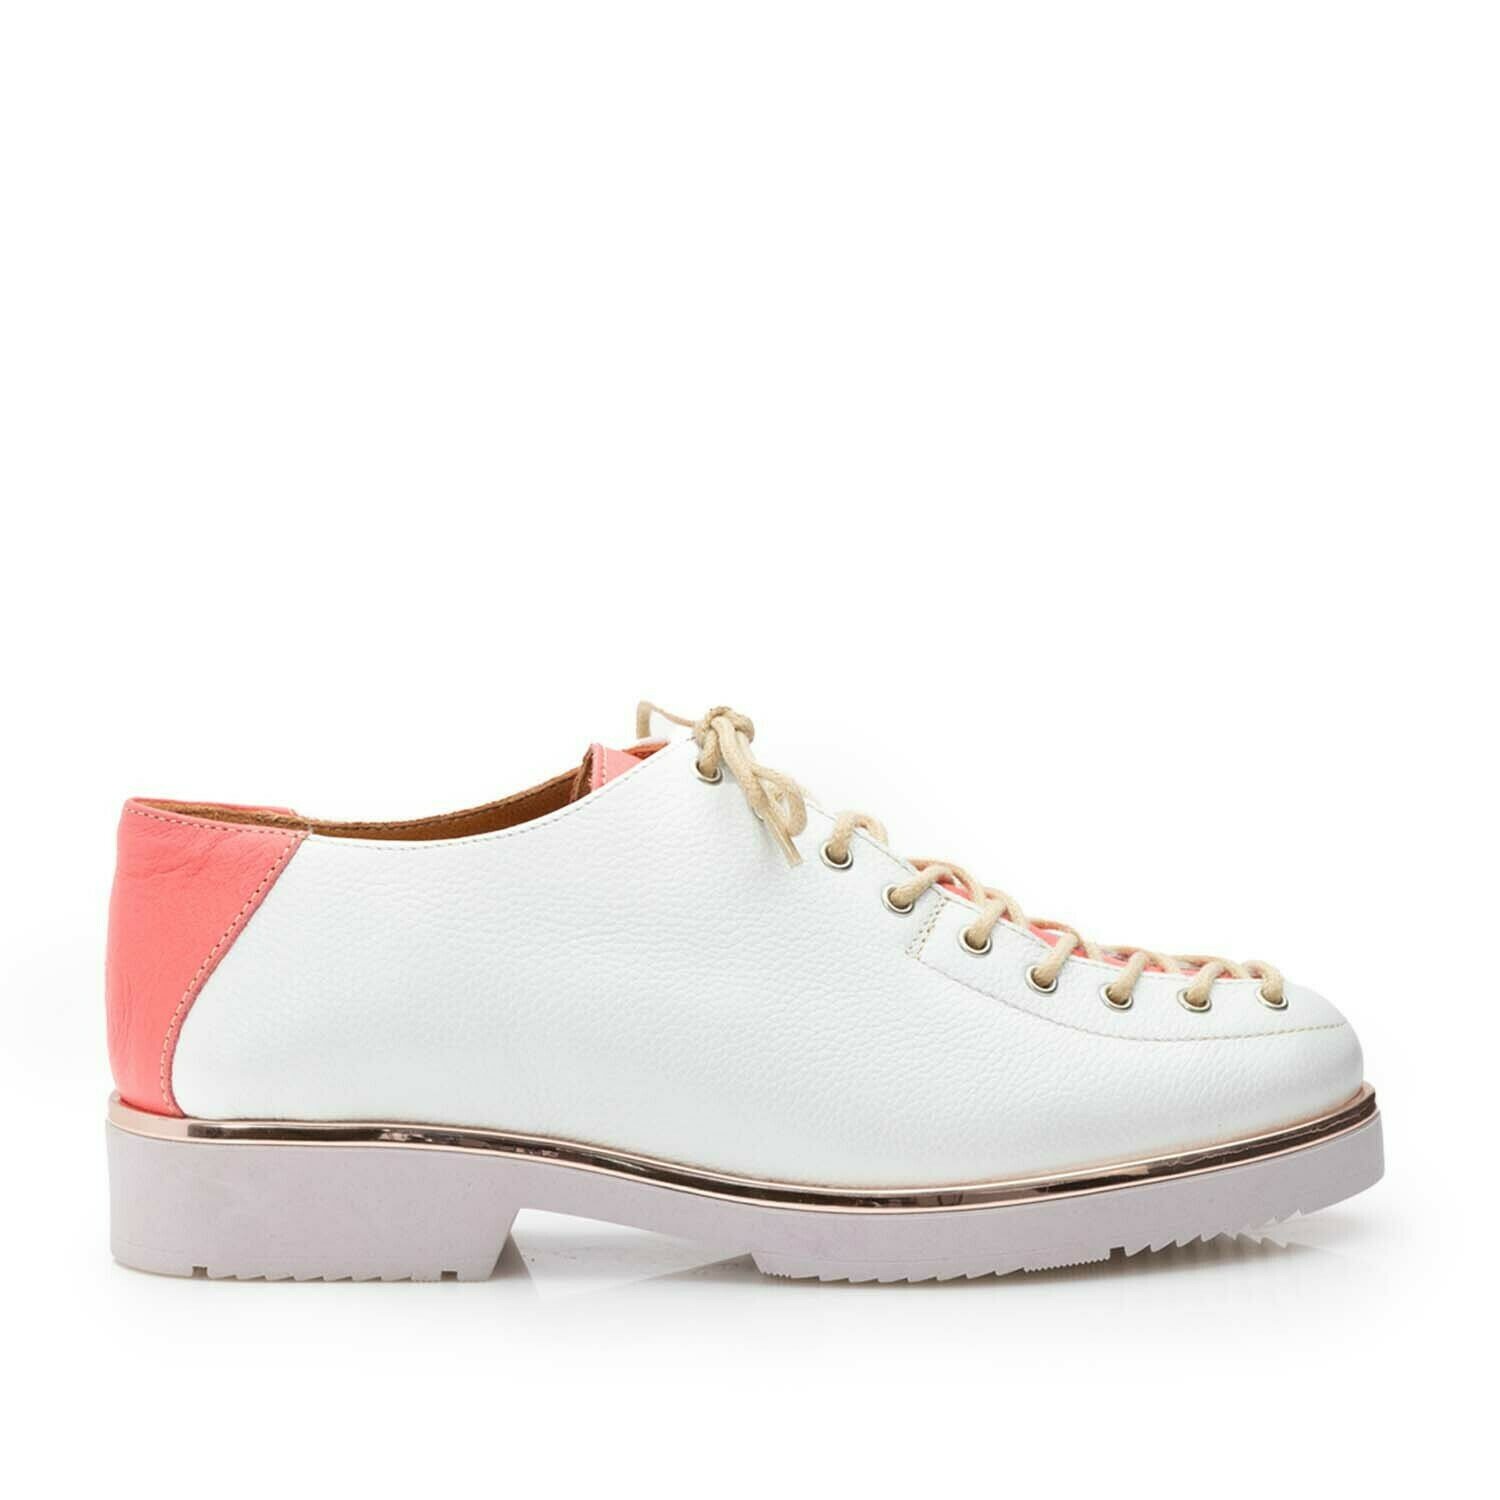 Pantofi casual dama cu siret pana in varf din piele naturala, Leofex- 194-1 Alb Roz Box